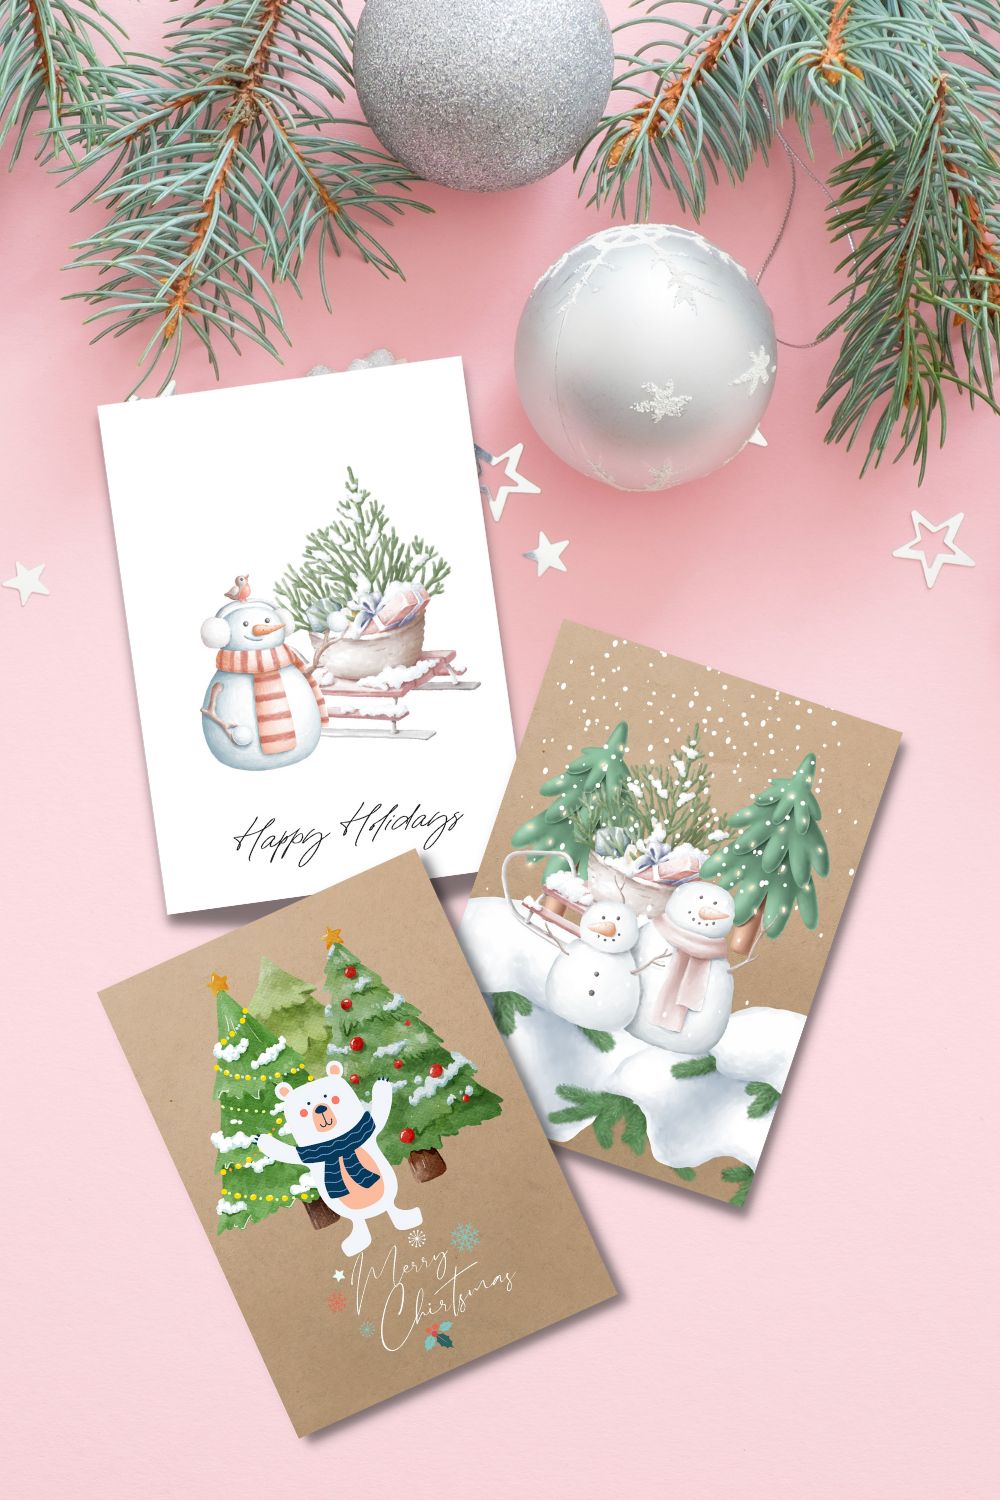 Printable Merry Xmas Cards Design pinterest image.